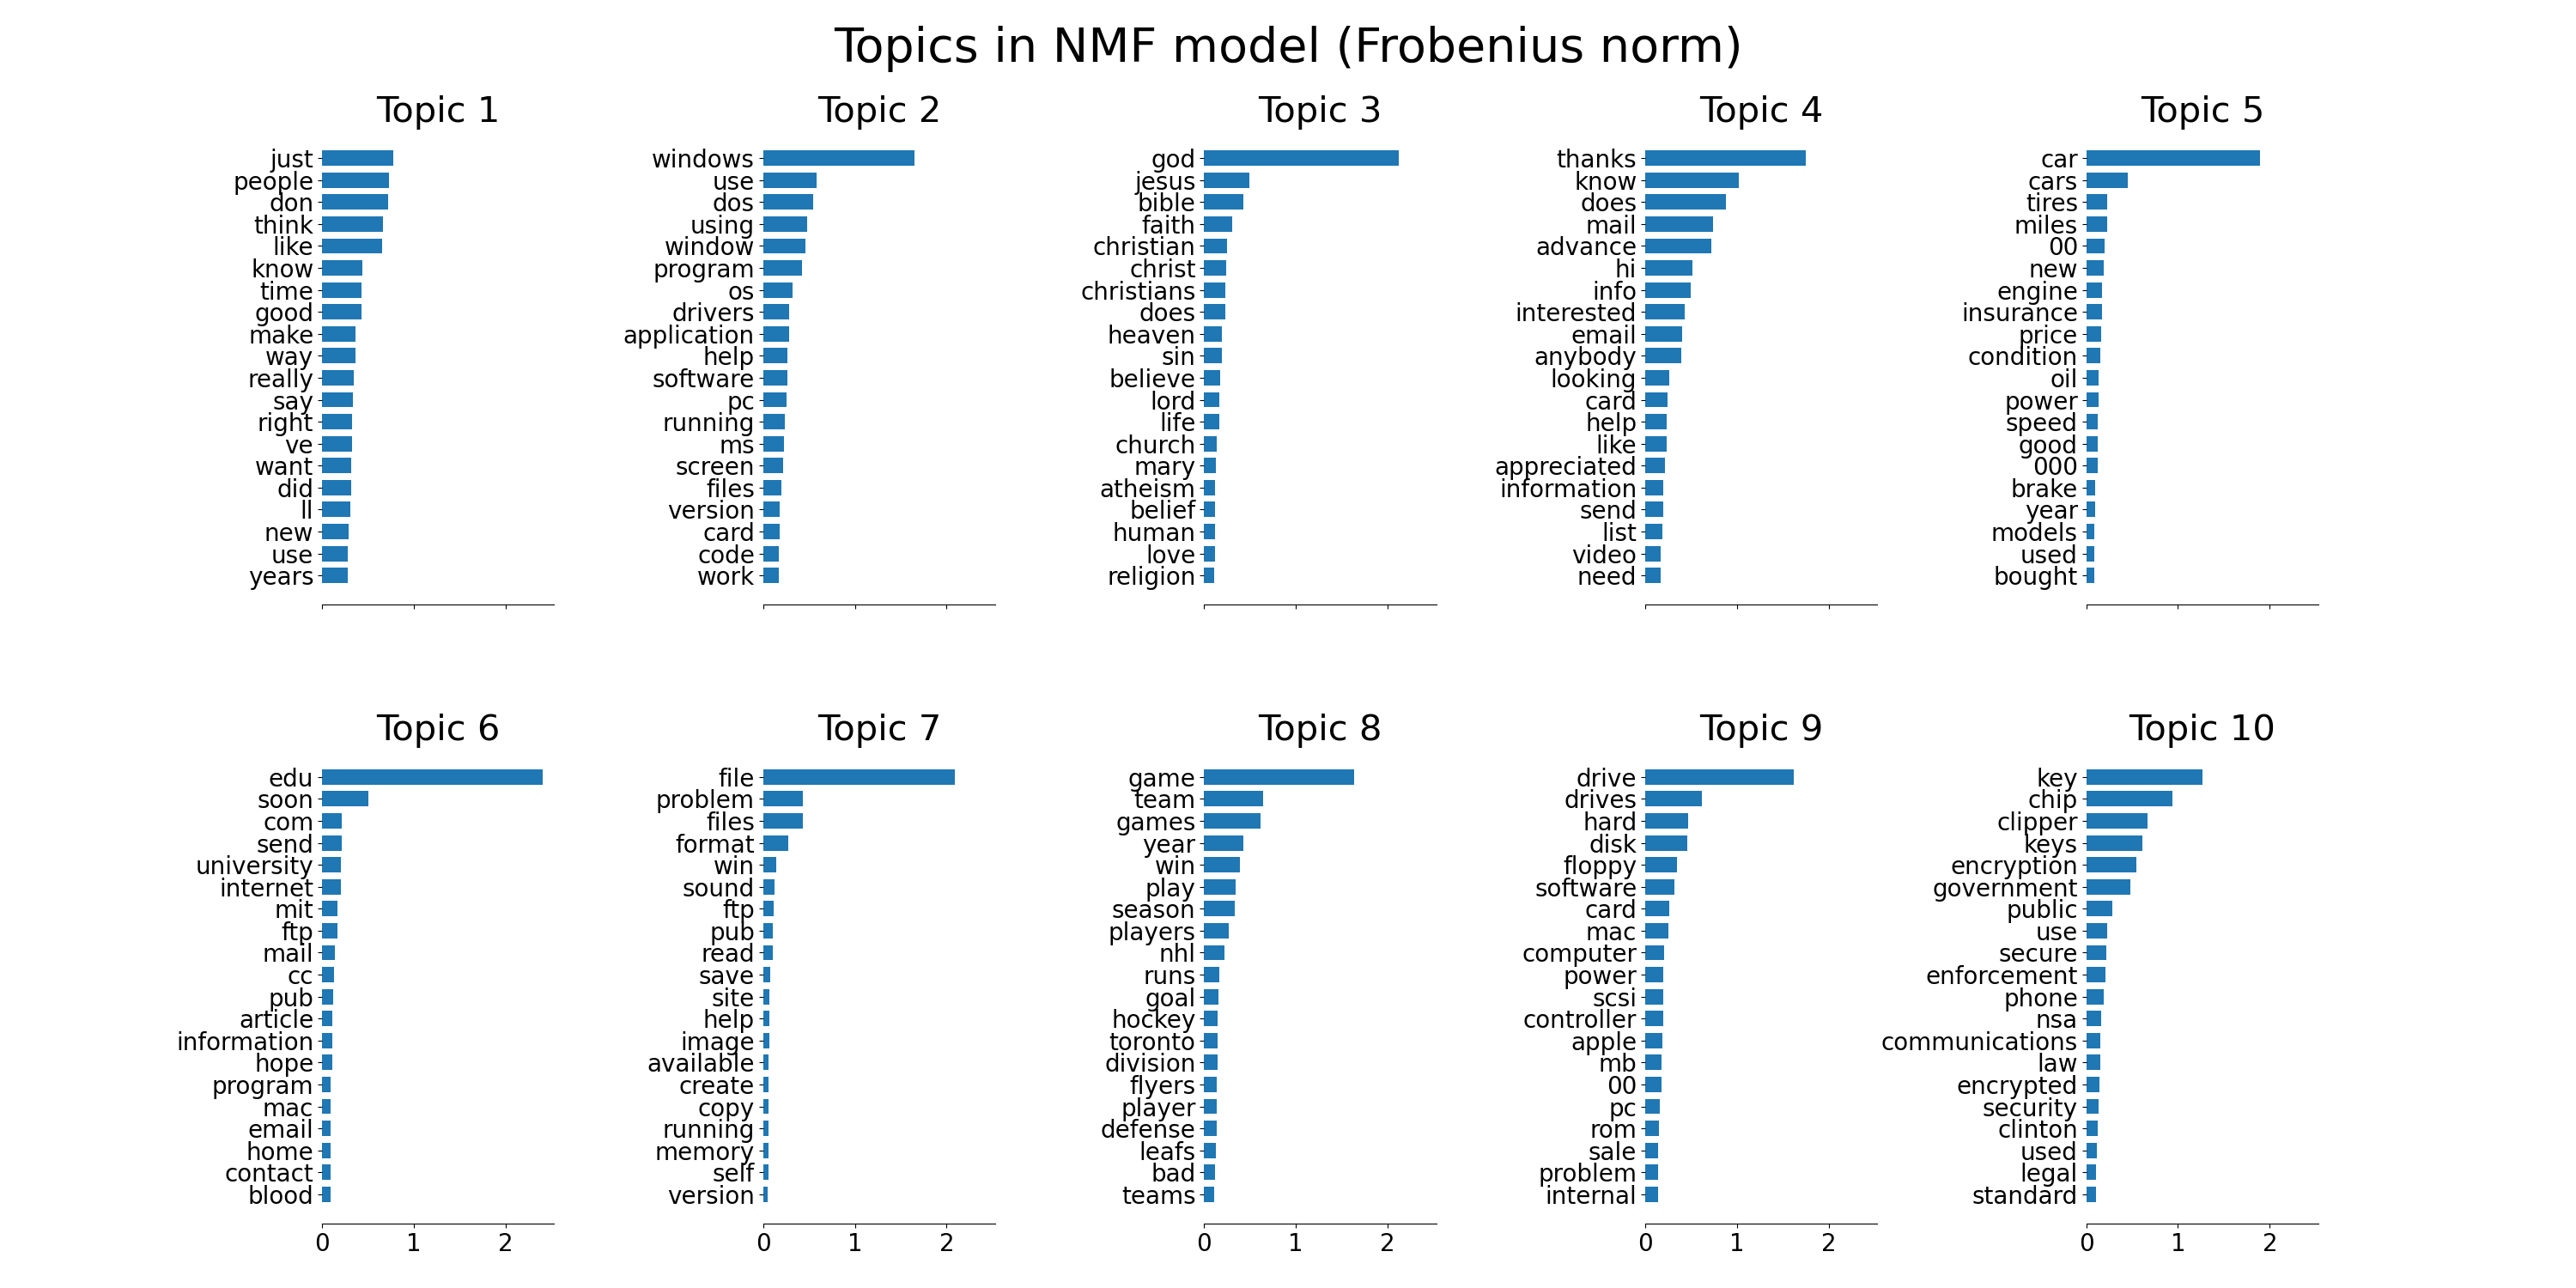 Topics in NMF model (Frobenius norm), Topic 1, Topic 2, Topic 3, Topic 4, Topic 5, Topic 6, Topic 7, Topic 8, Topic 9, Topic 10